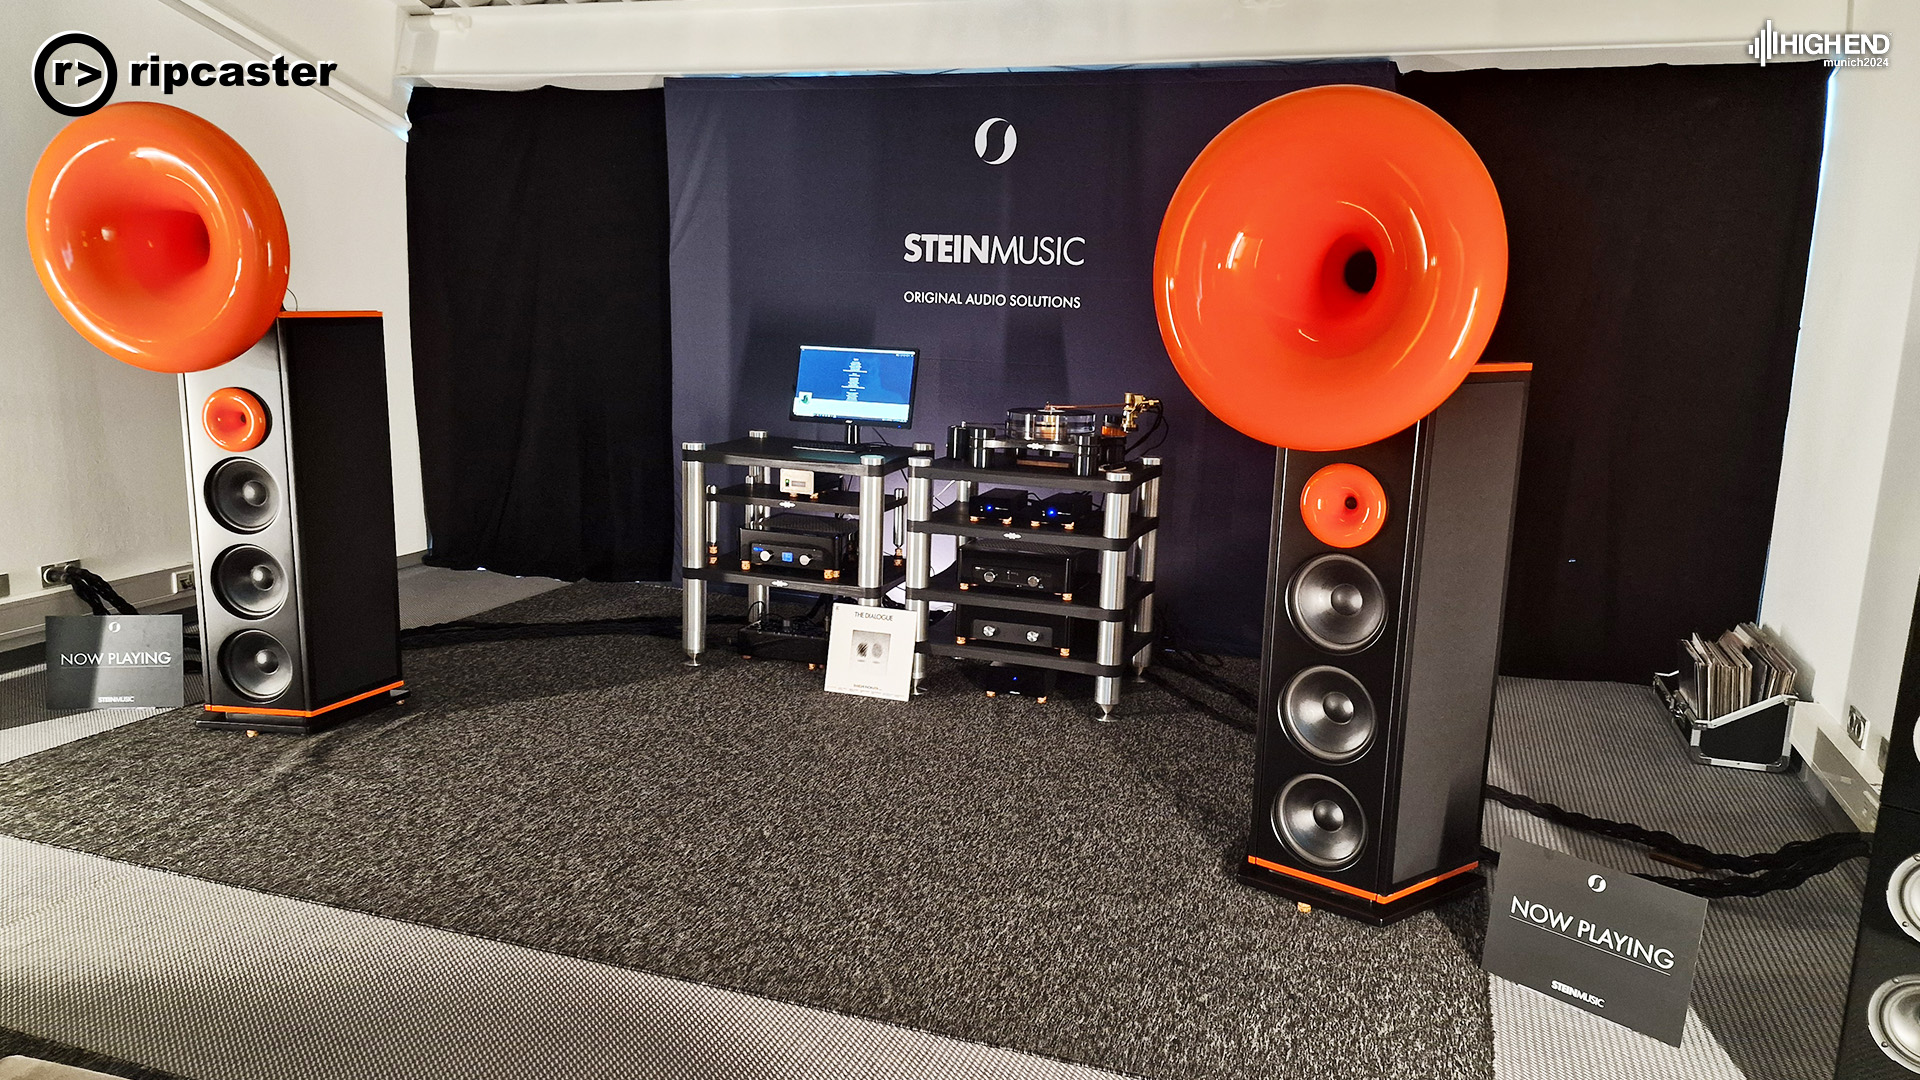 A pair of floorstanding speakers with HiFi kit between.  Stein Music.  The speakers have orange trumpets on the top